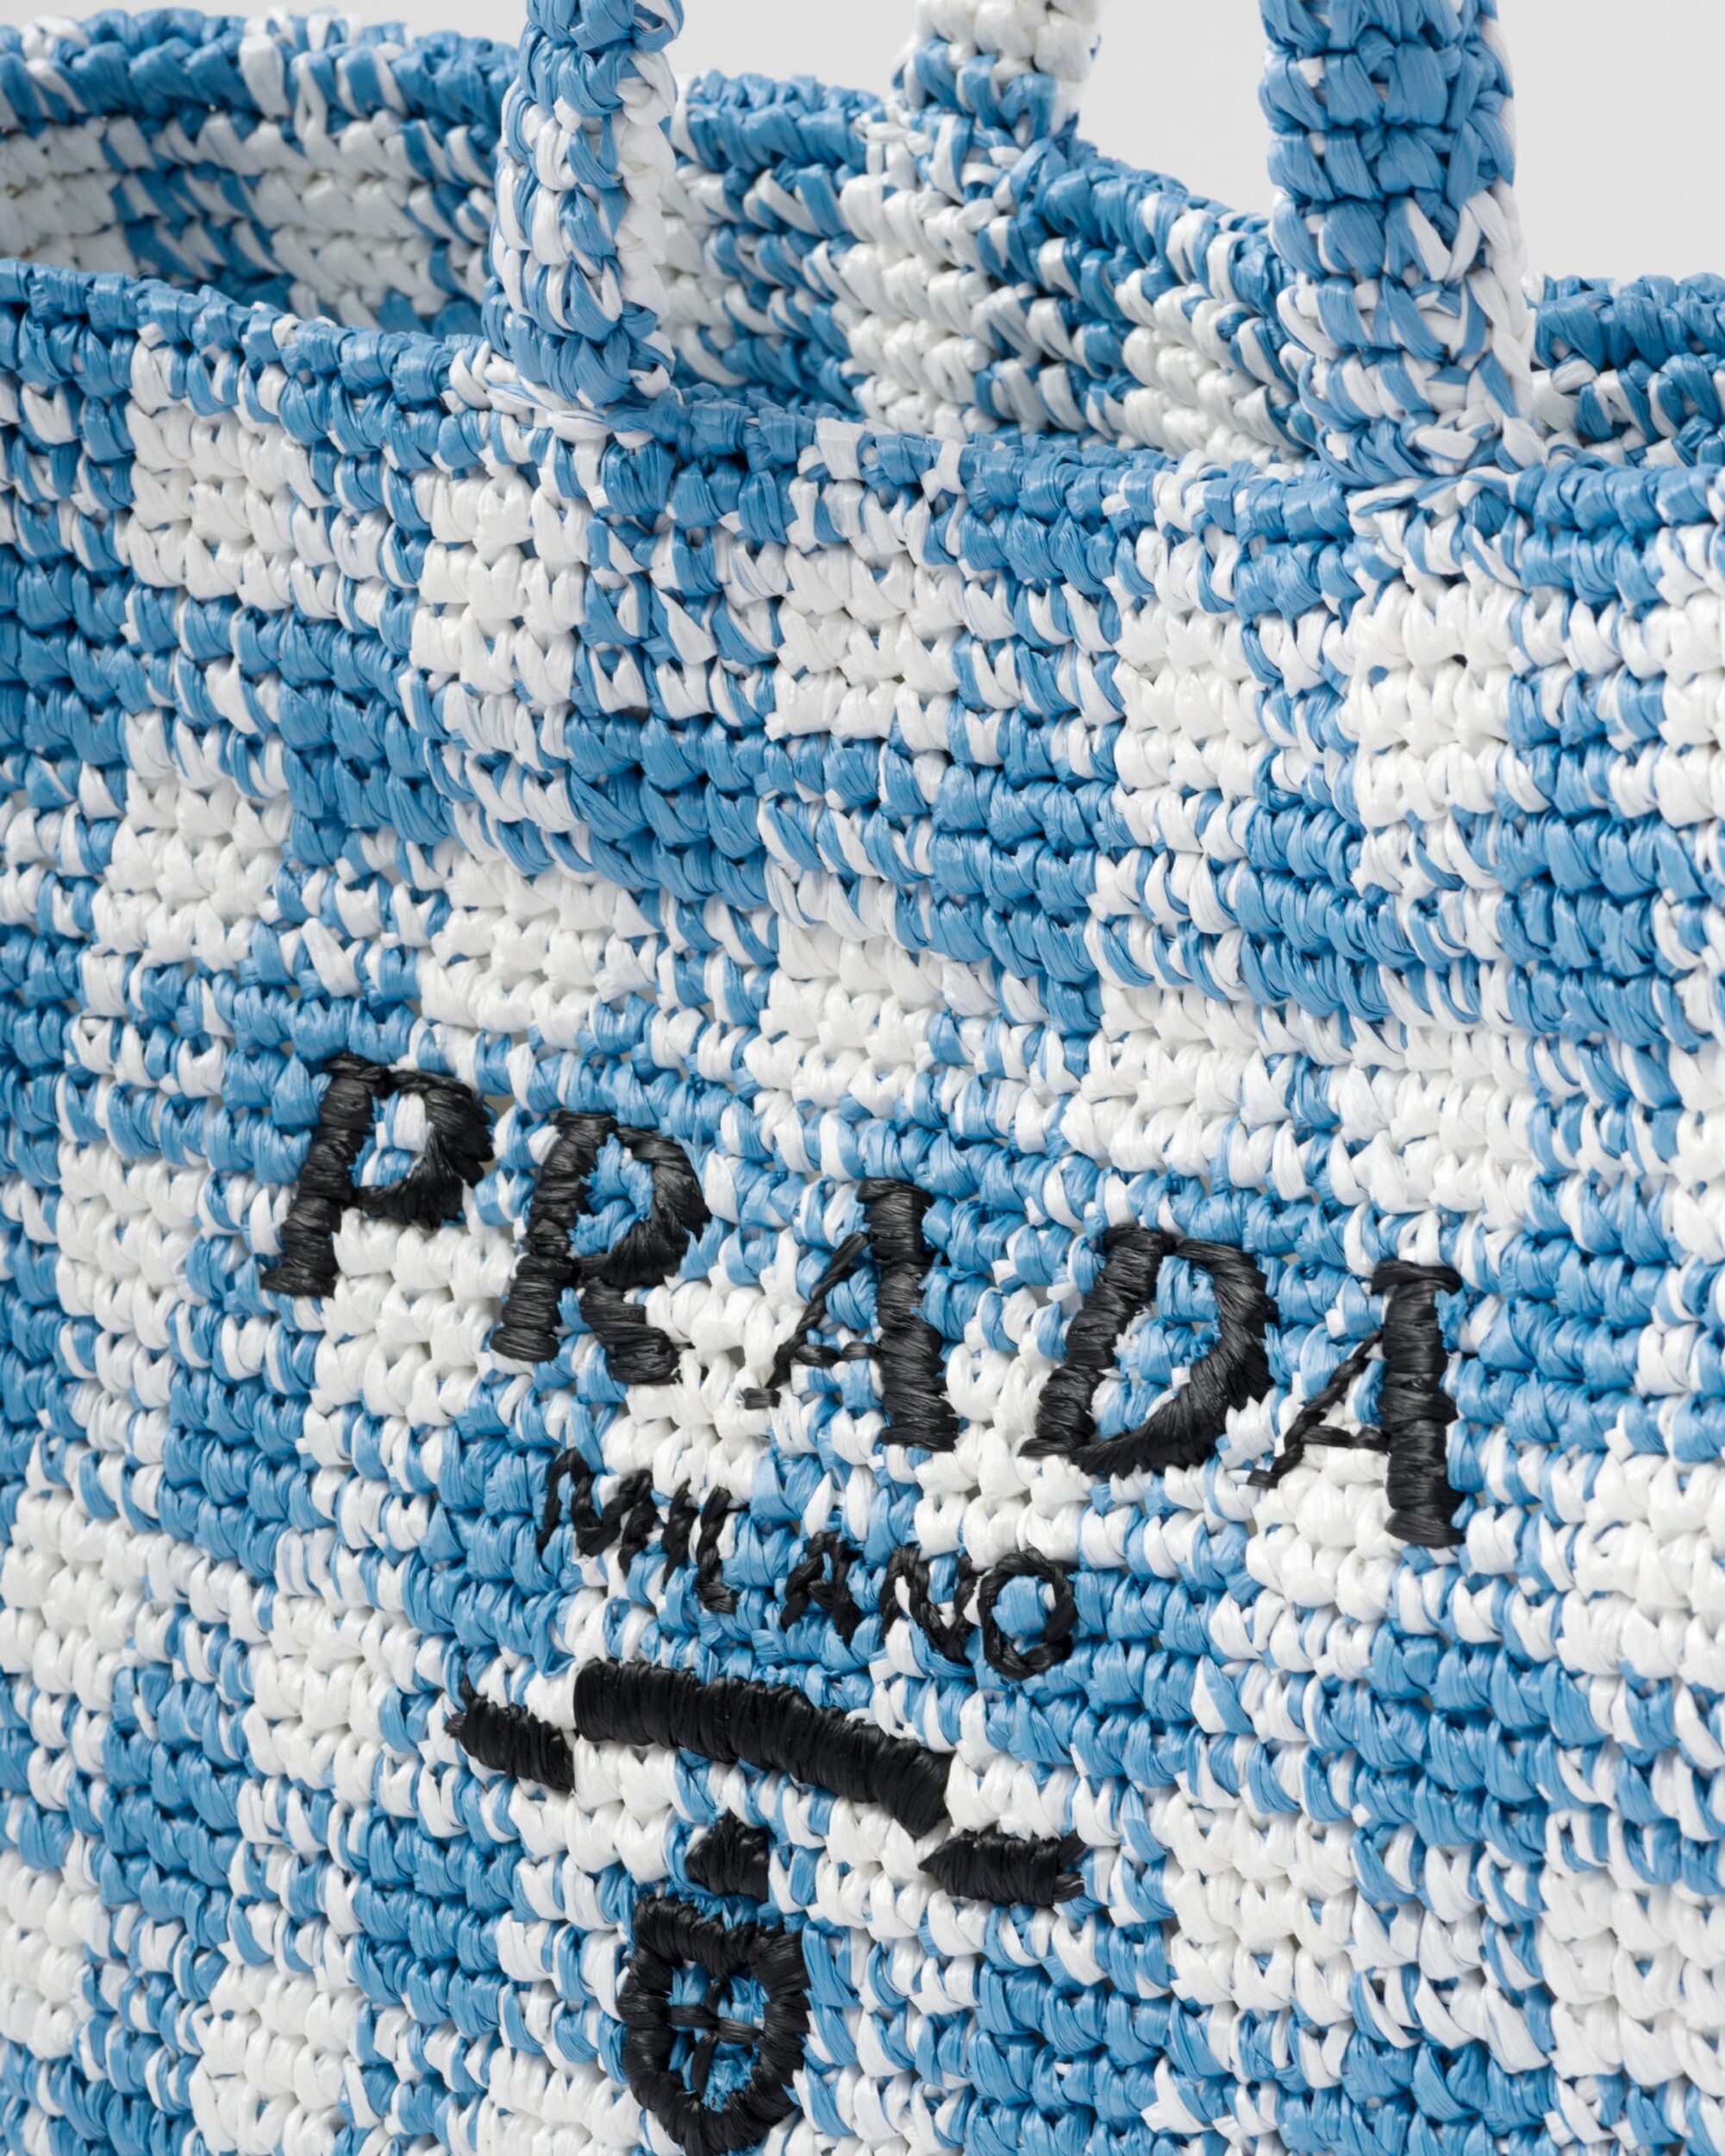 Gigi Hadid's Prada Large Crochet Tote Bag